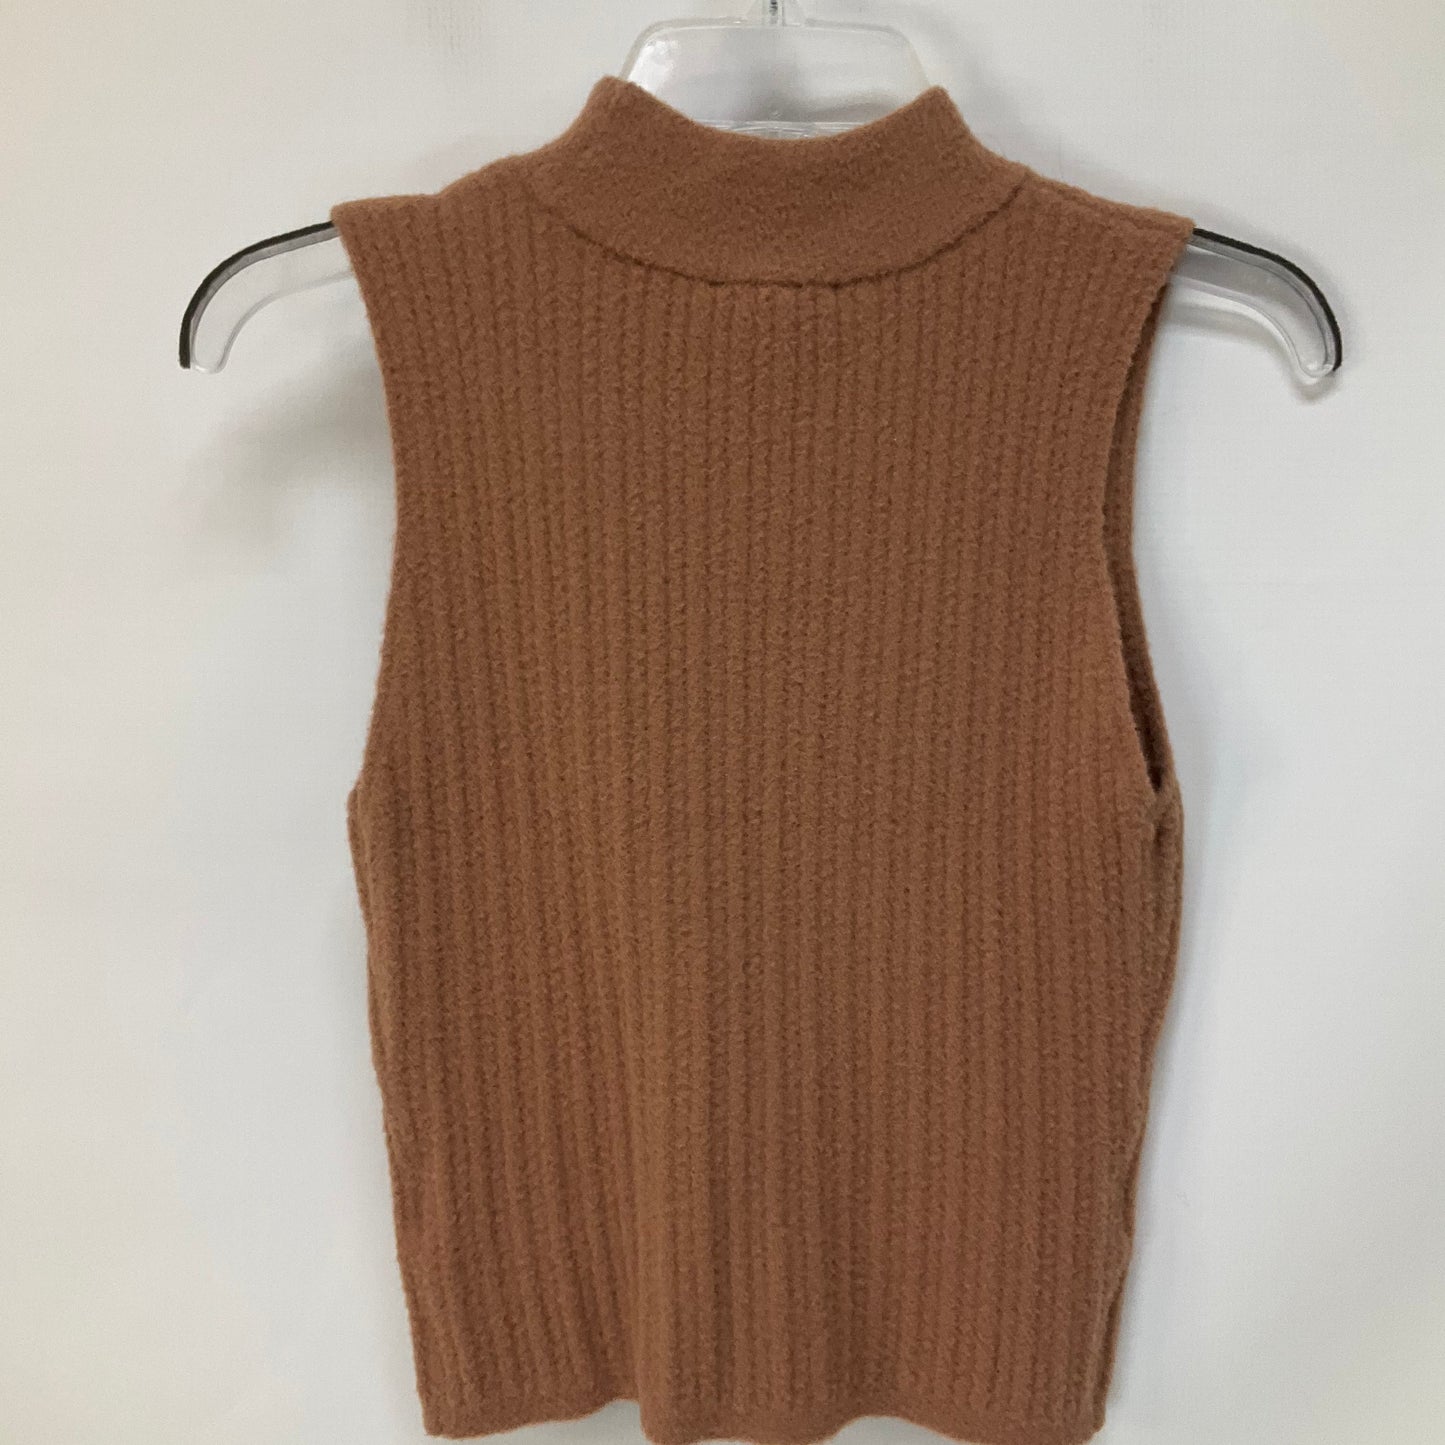 Tan Sweater Short Sleeve Express, Size S